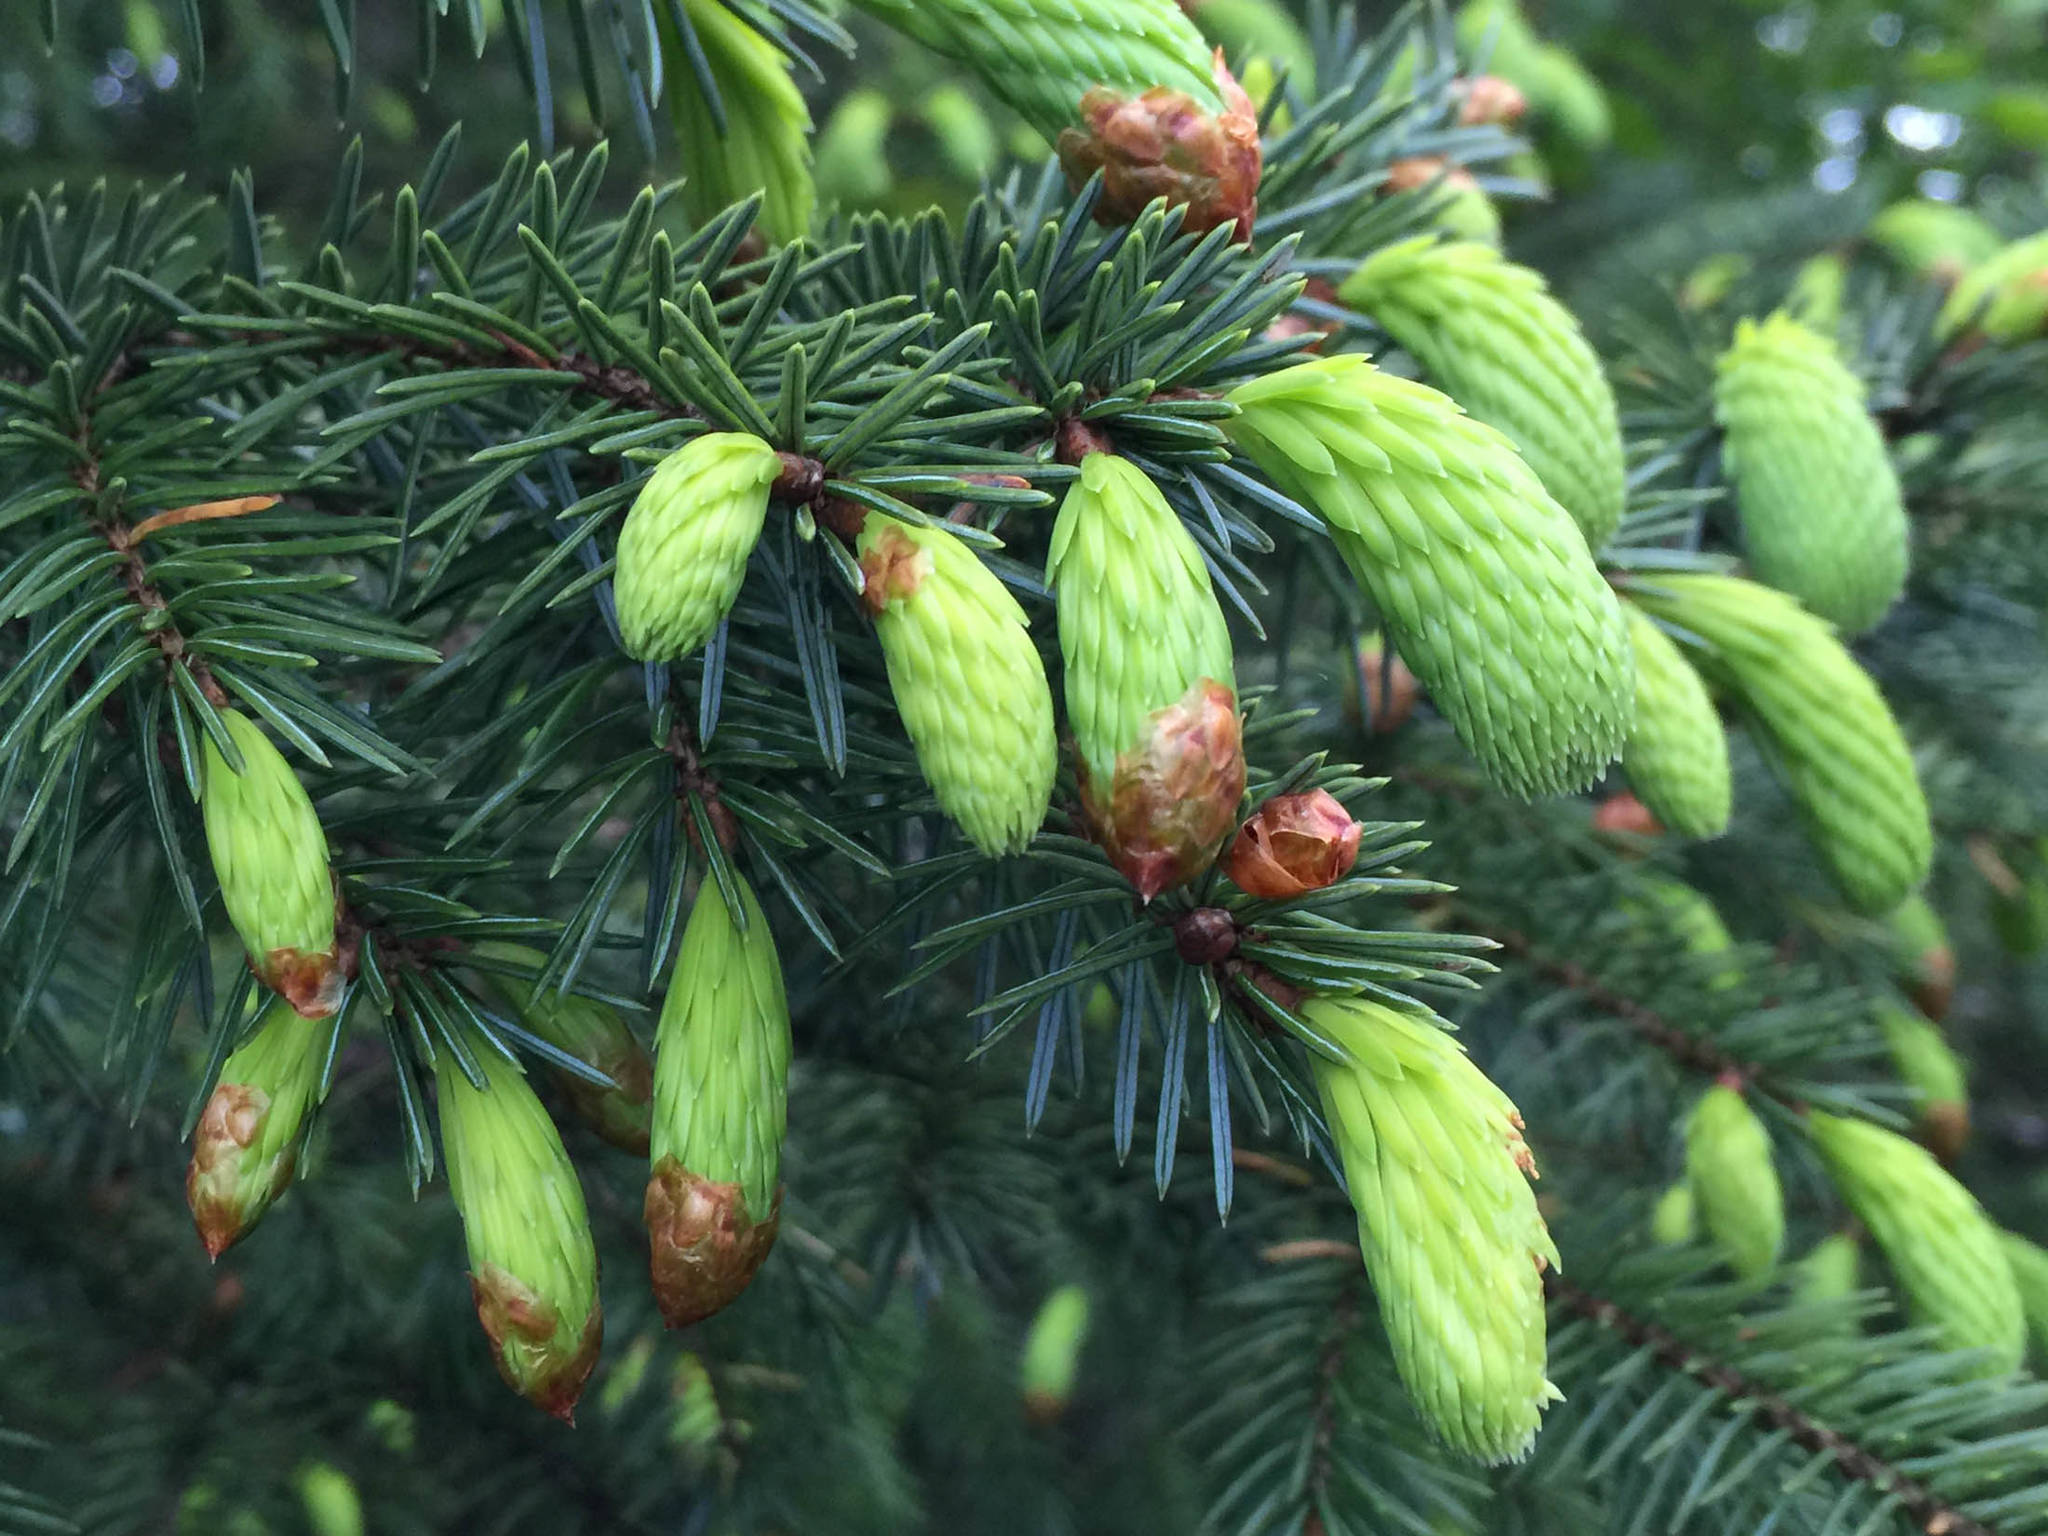 Spruce tips emerge in the spring. Photo by Vivian Mork Yeilk’.